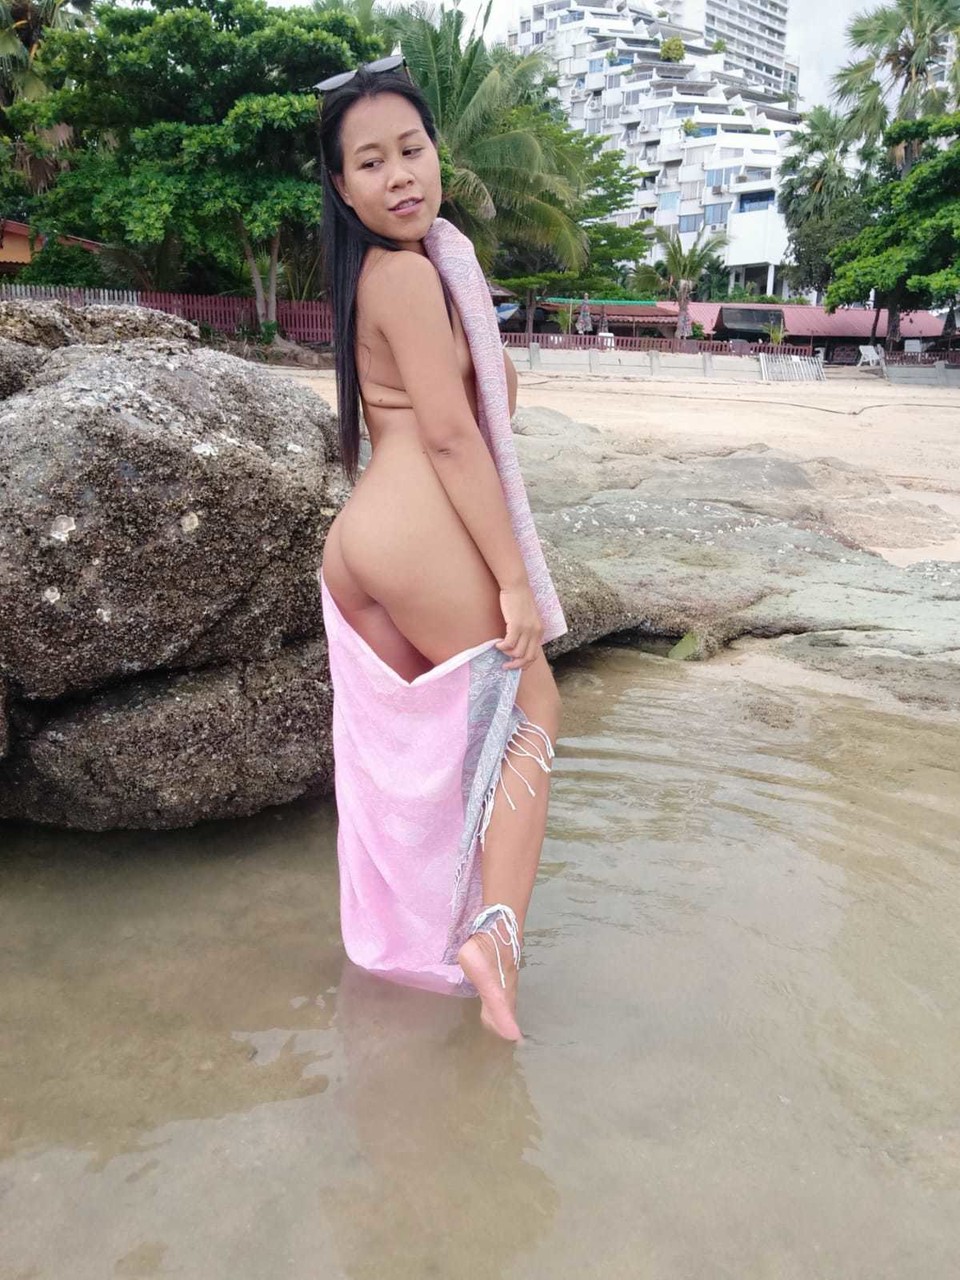 Gorgeous Asian amateur Kiki Asia shows her hot ass in a bikini at the beach photo porno #425545193